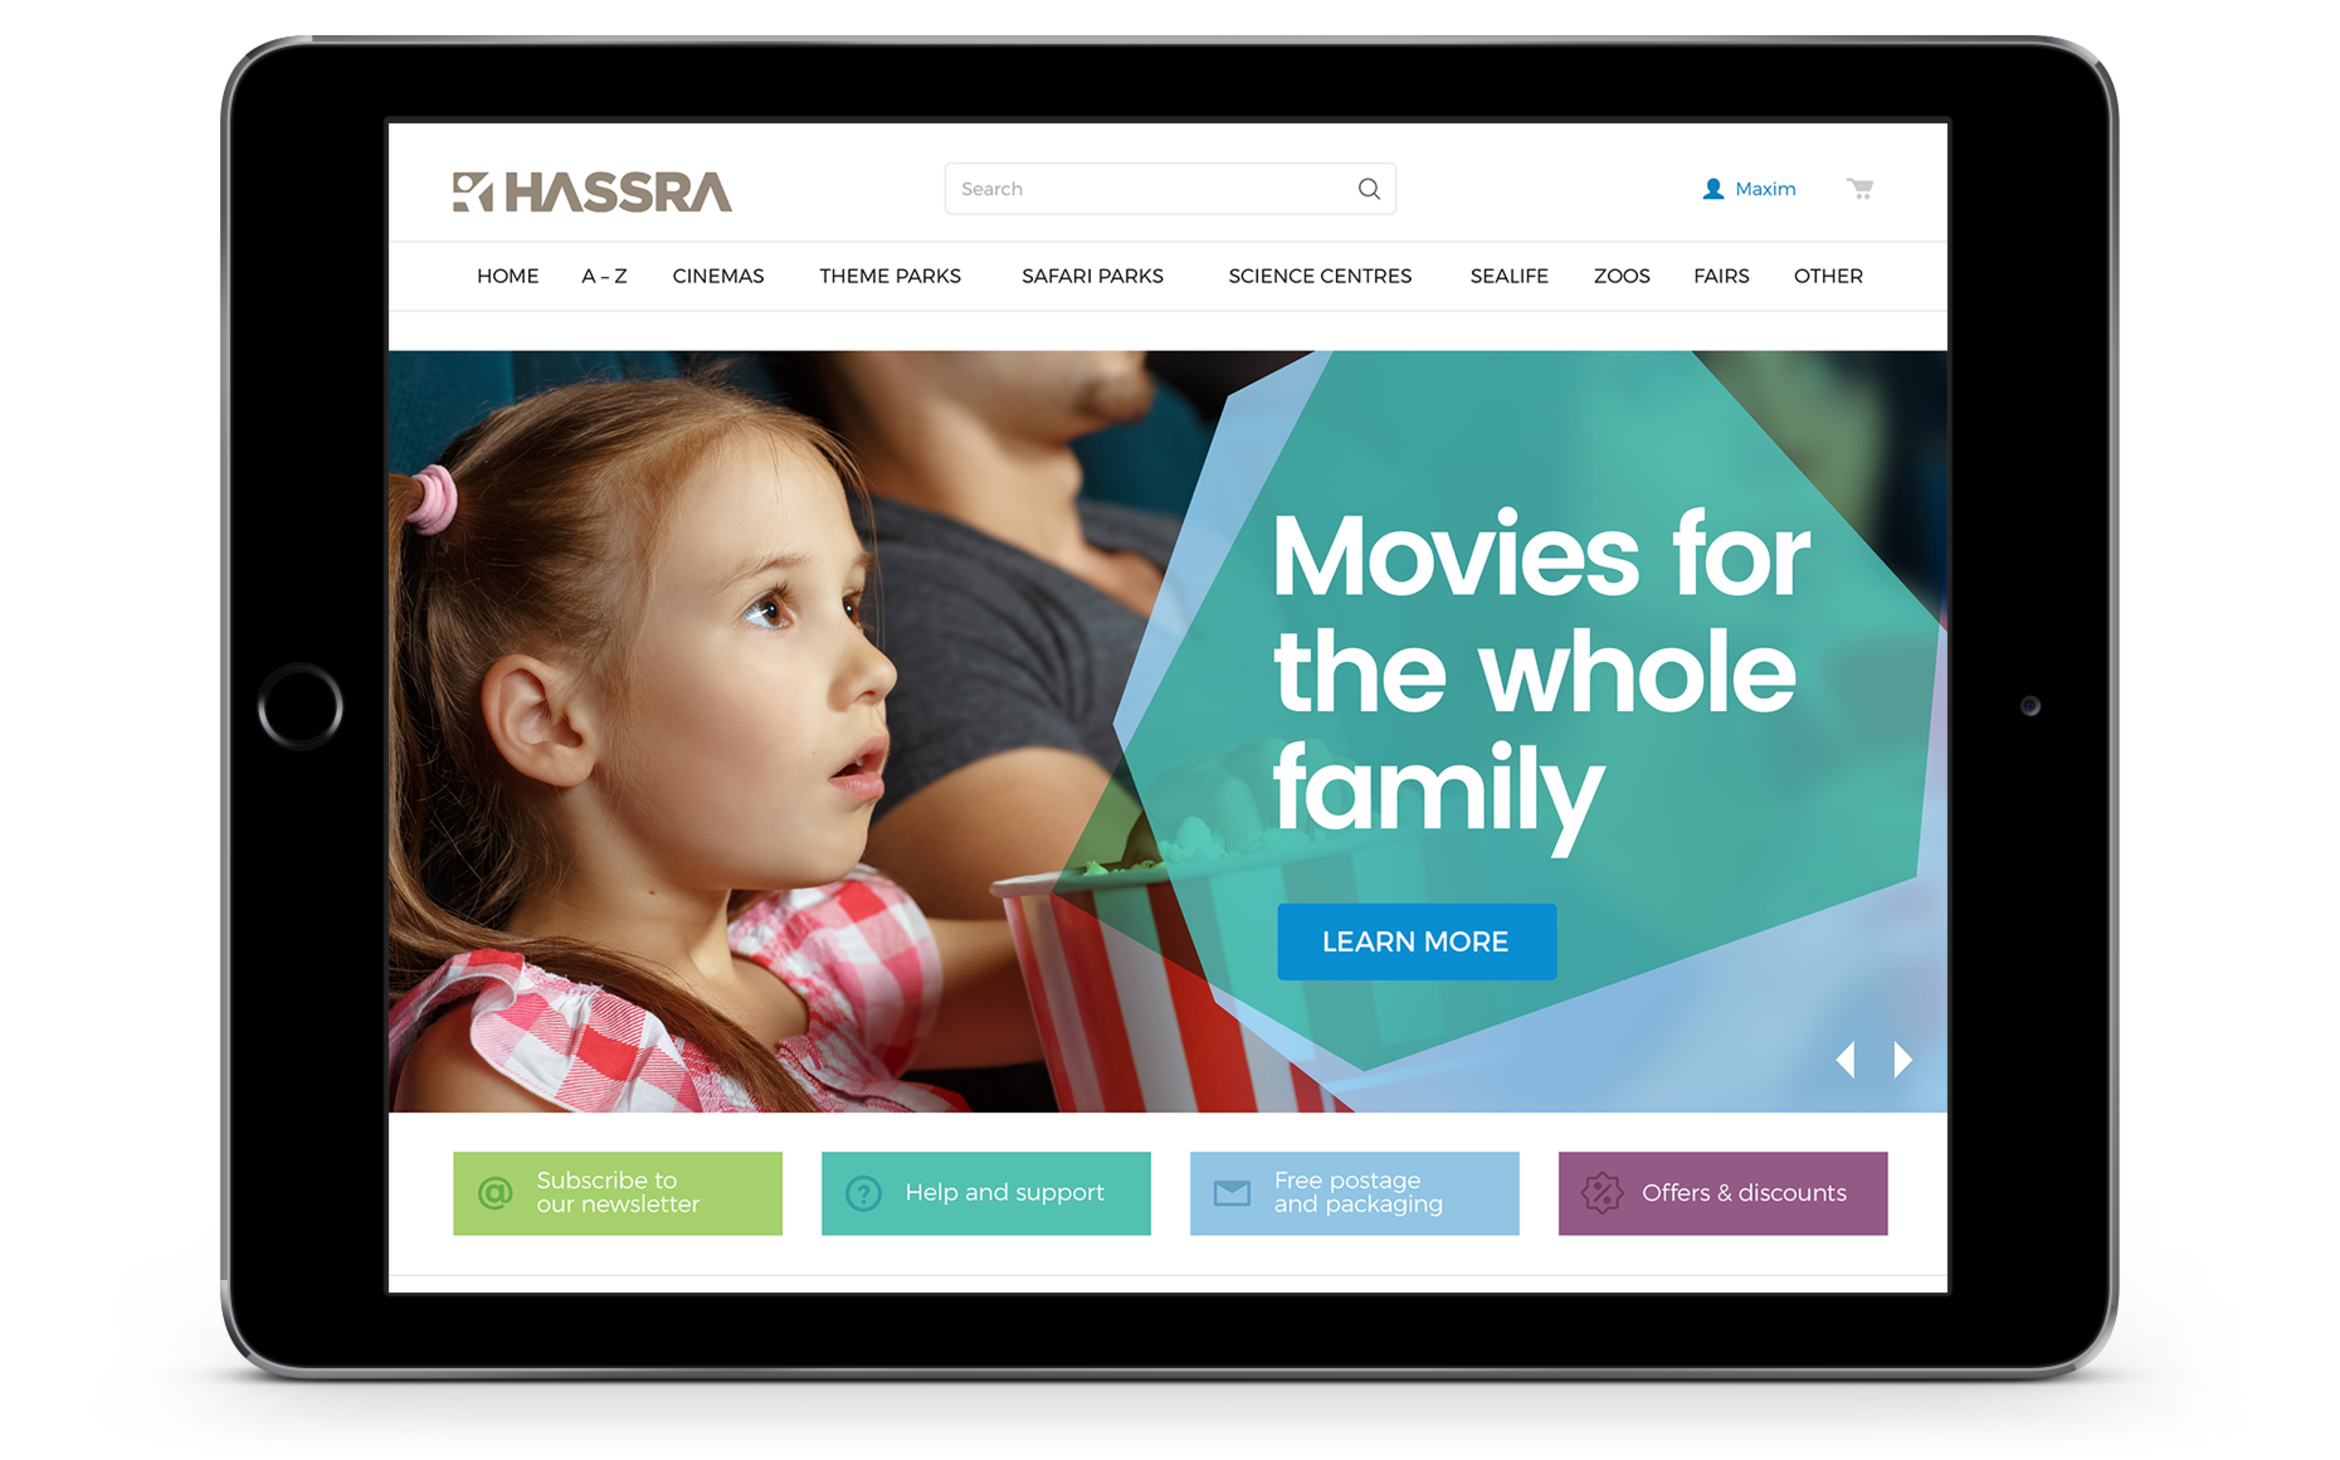 HASSRA's Online Shop